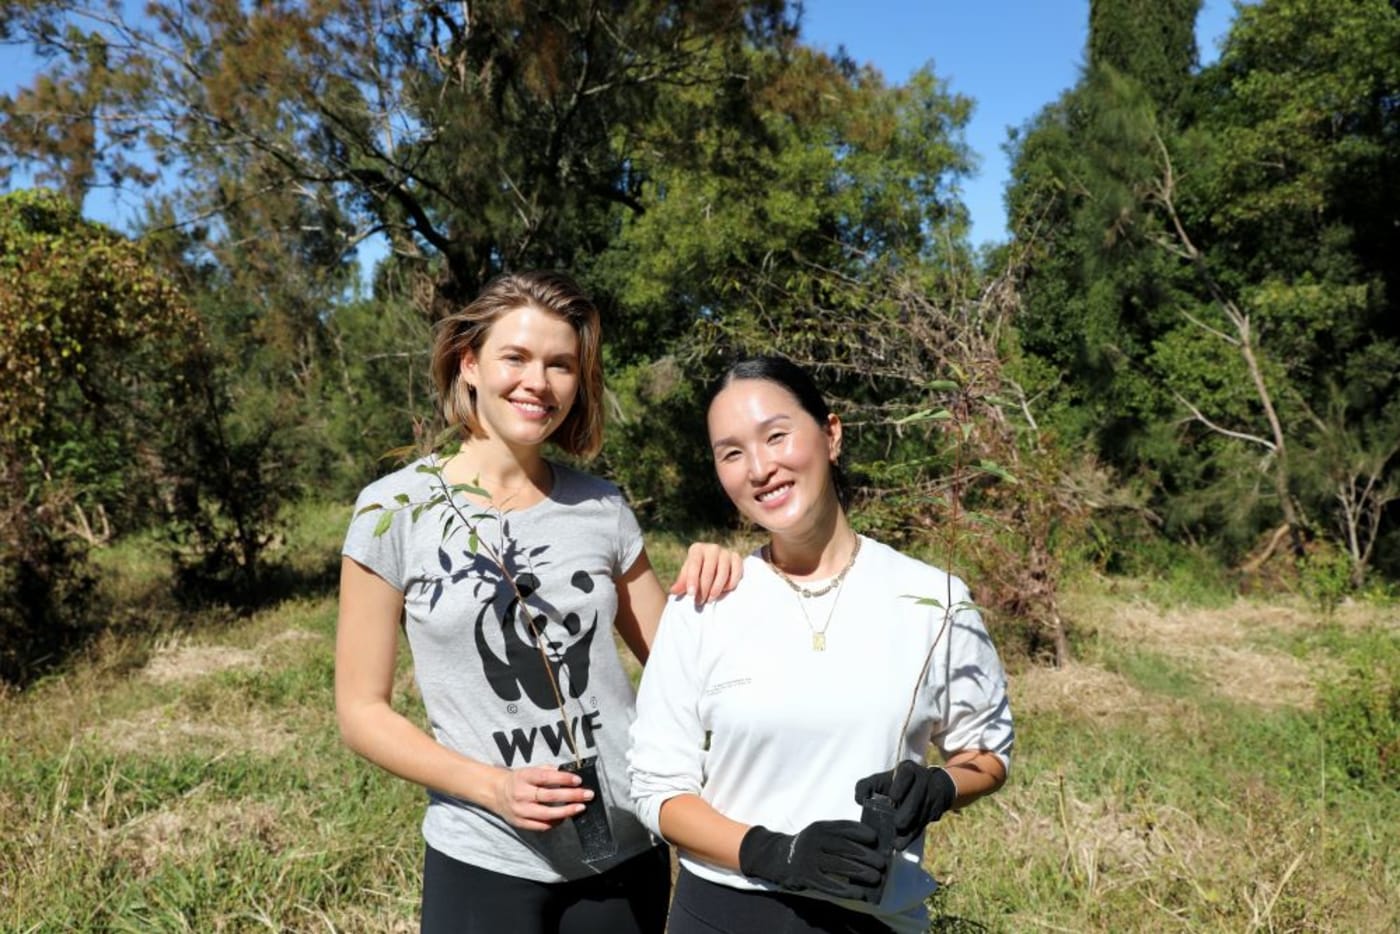 Nicole Warne and Victoria Lee spent the day helping Bangalow Koalas plant koala habitat trees